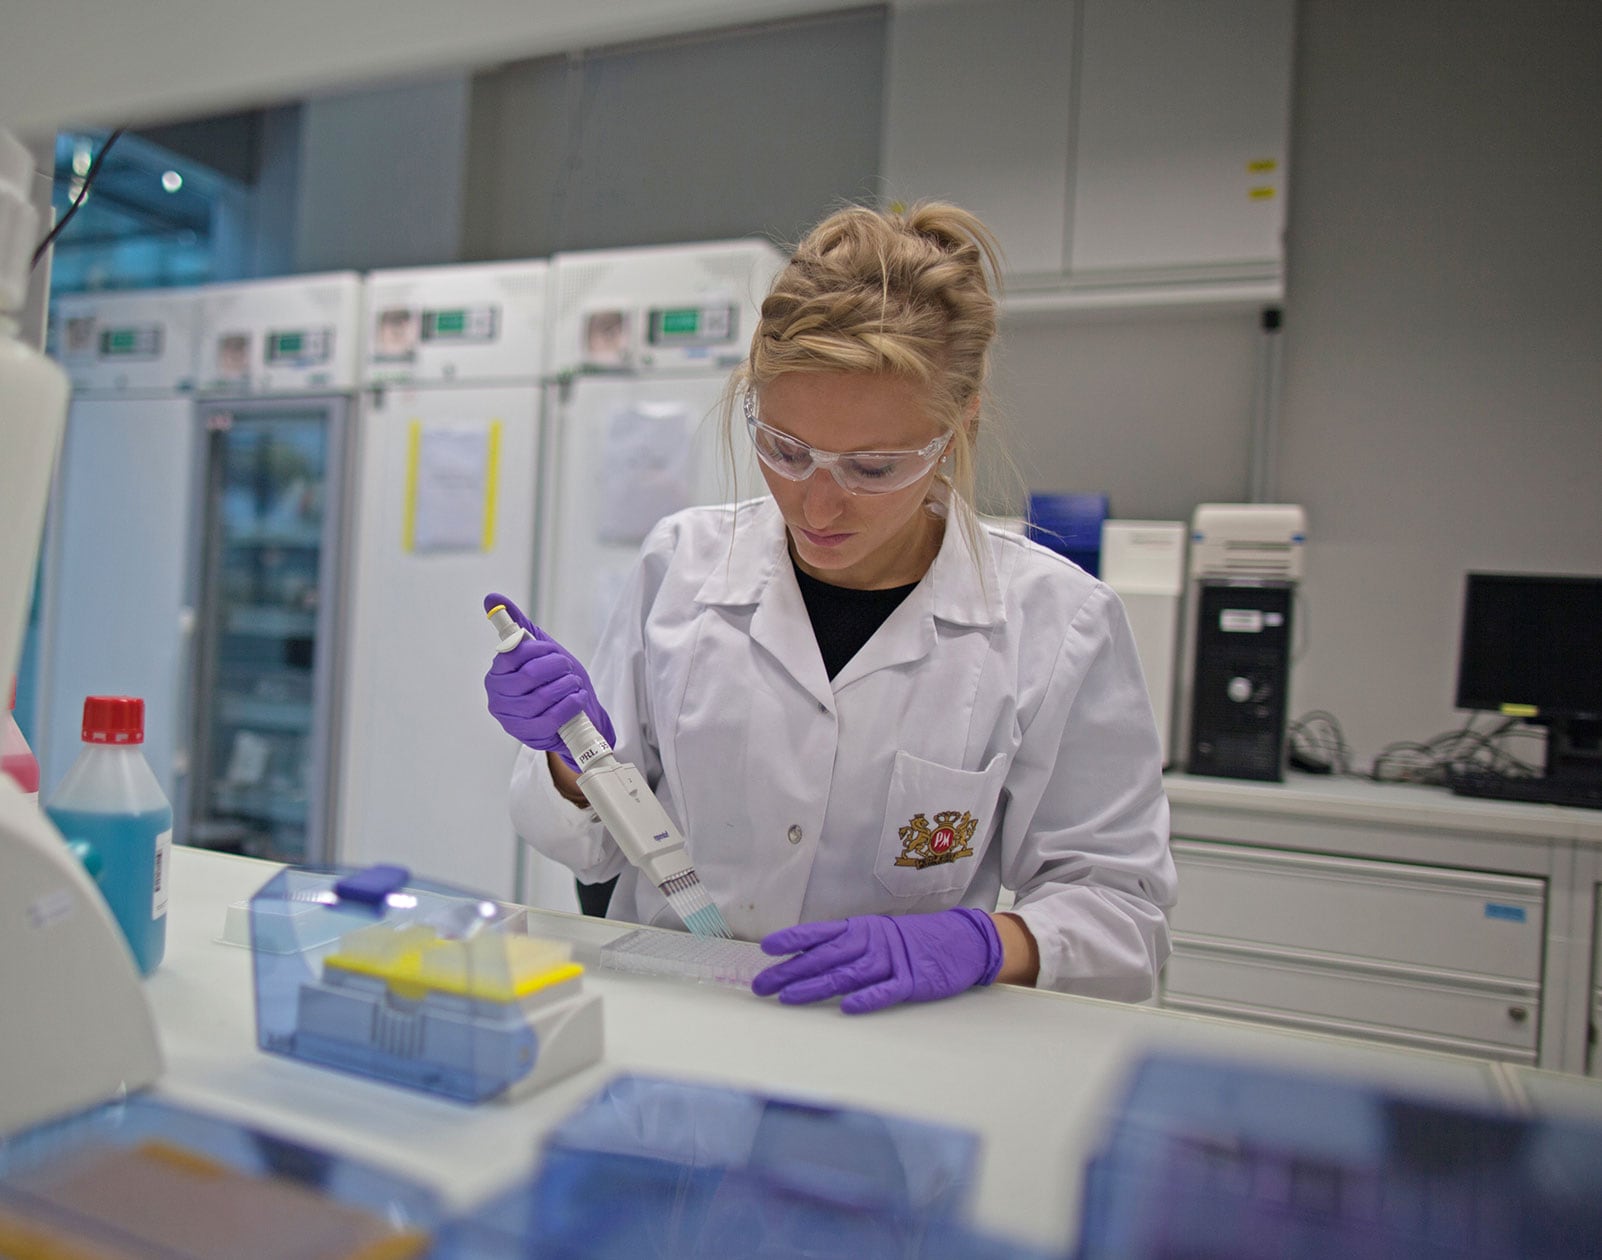 Female scientist in a laboratory